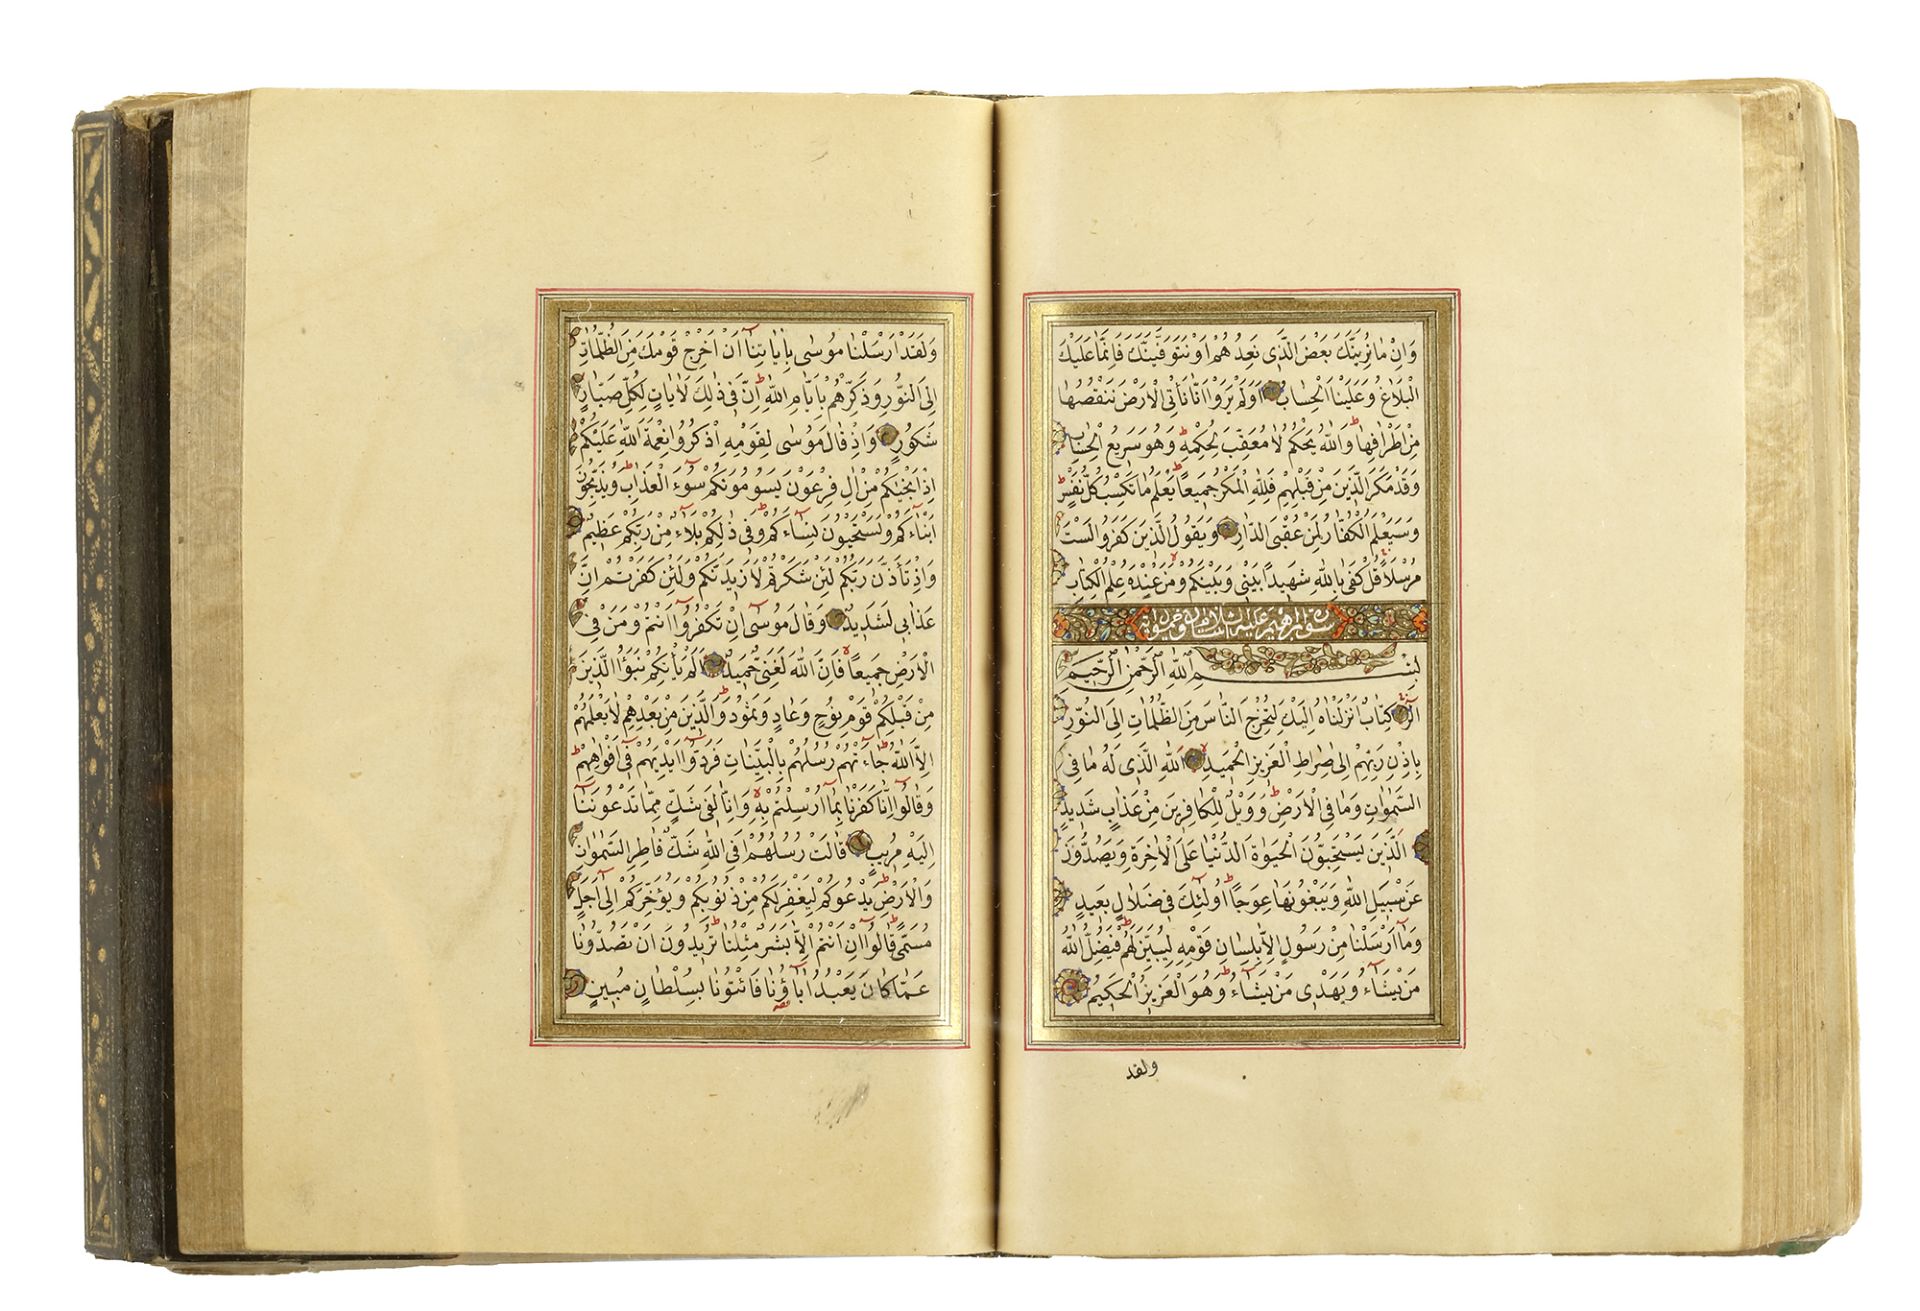 AN ILLUMINATED QURAN COPIED BY ISMA'IL BIN 'UMAR QALBAWI, OTTOMAN PROVINCIAL, DATED 1171 AH/1757-58 - Image 3 of 5